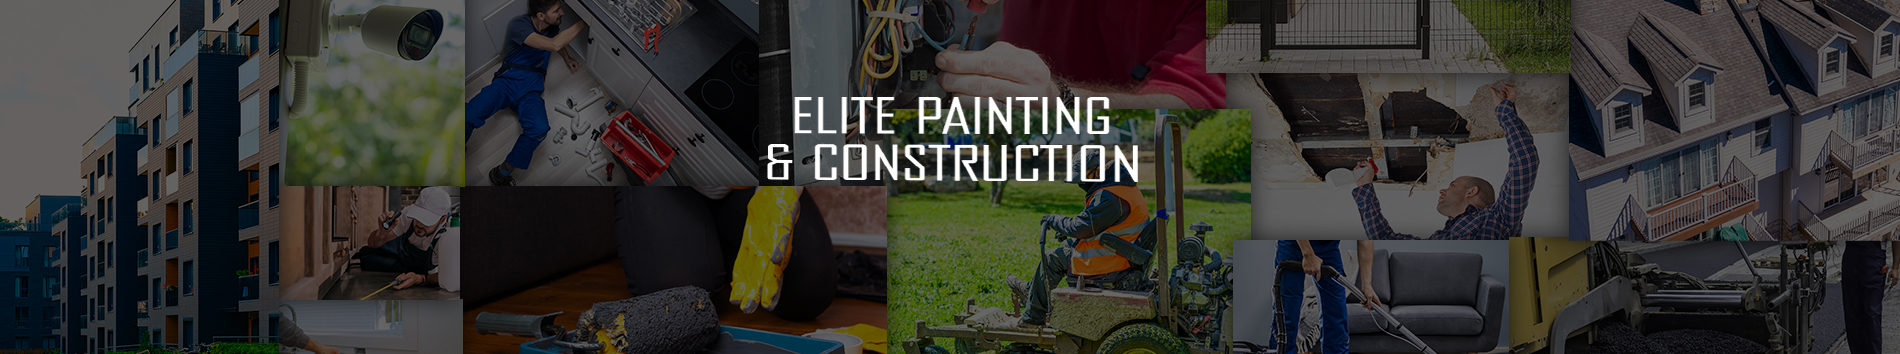 Elite Painting & Construction